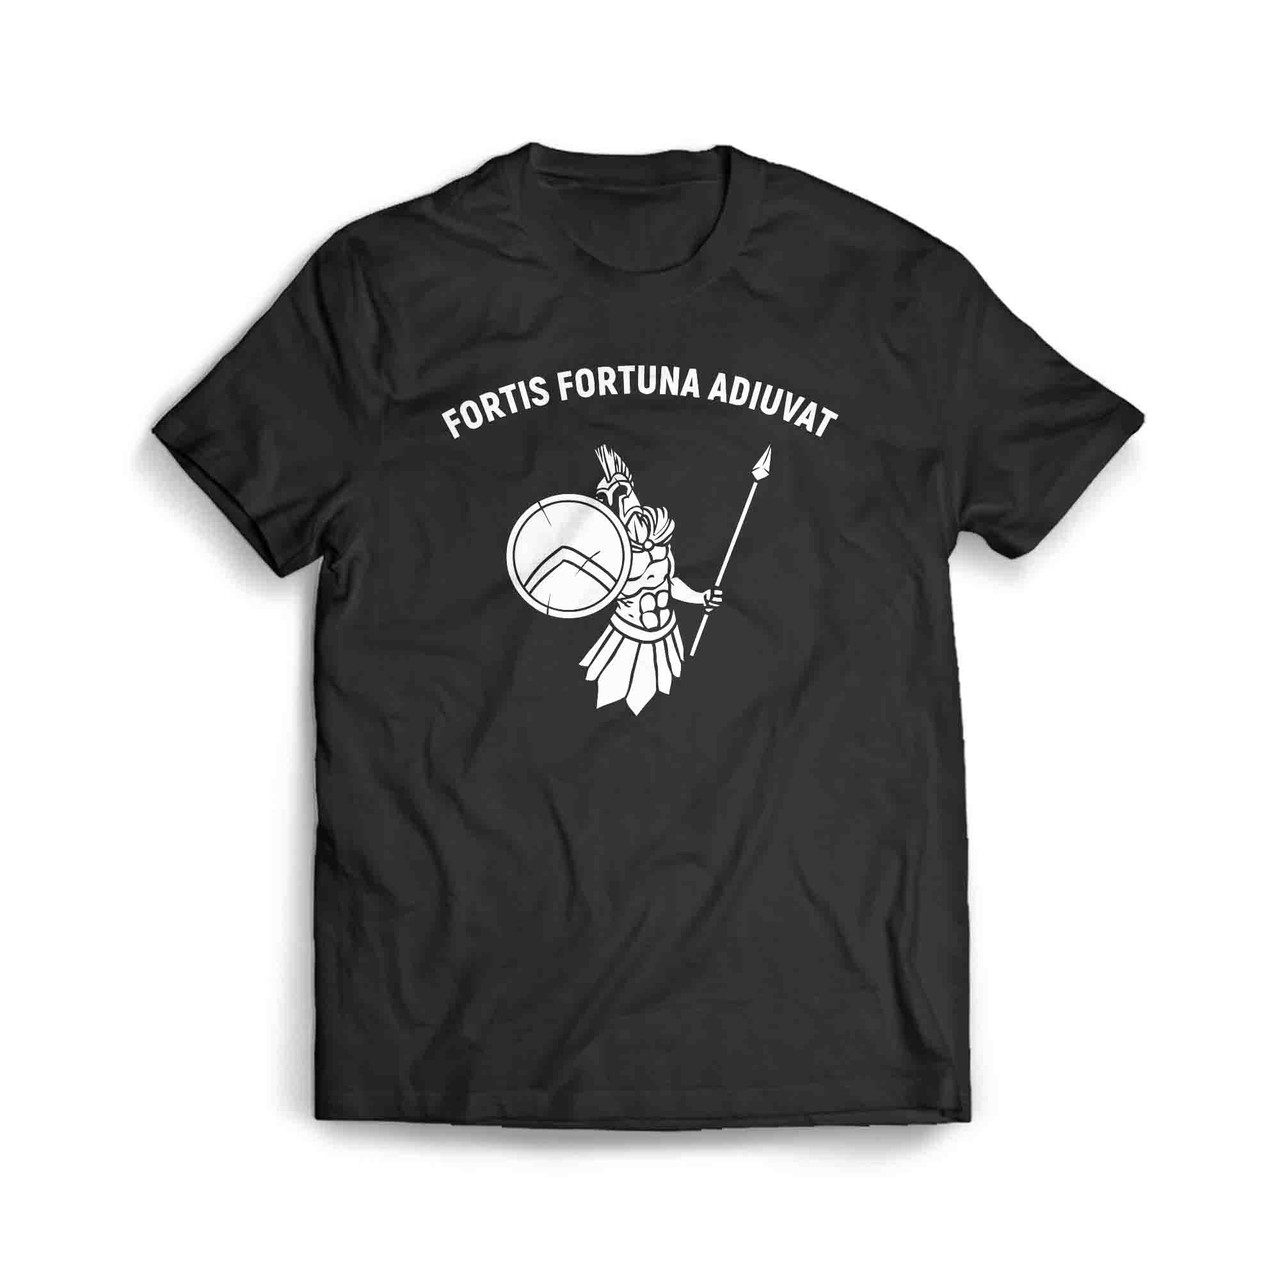 Fortis Fortuna Adiuvat 2 Men's T-Shirt